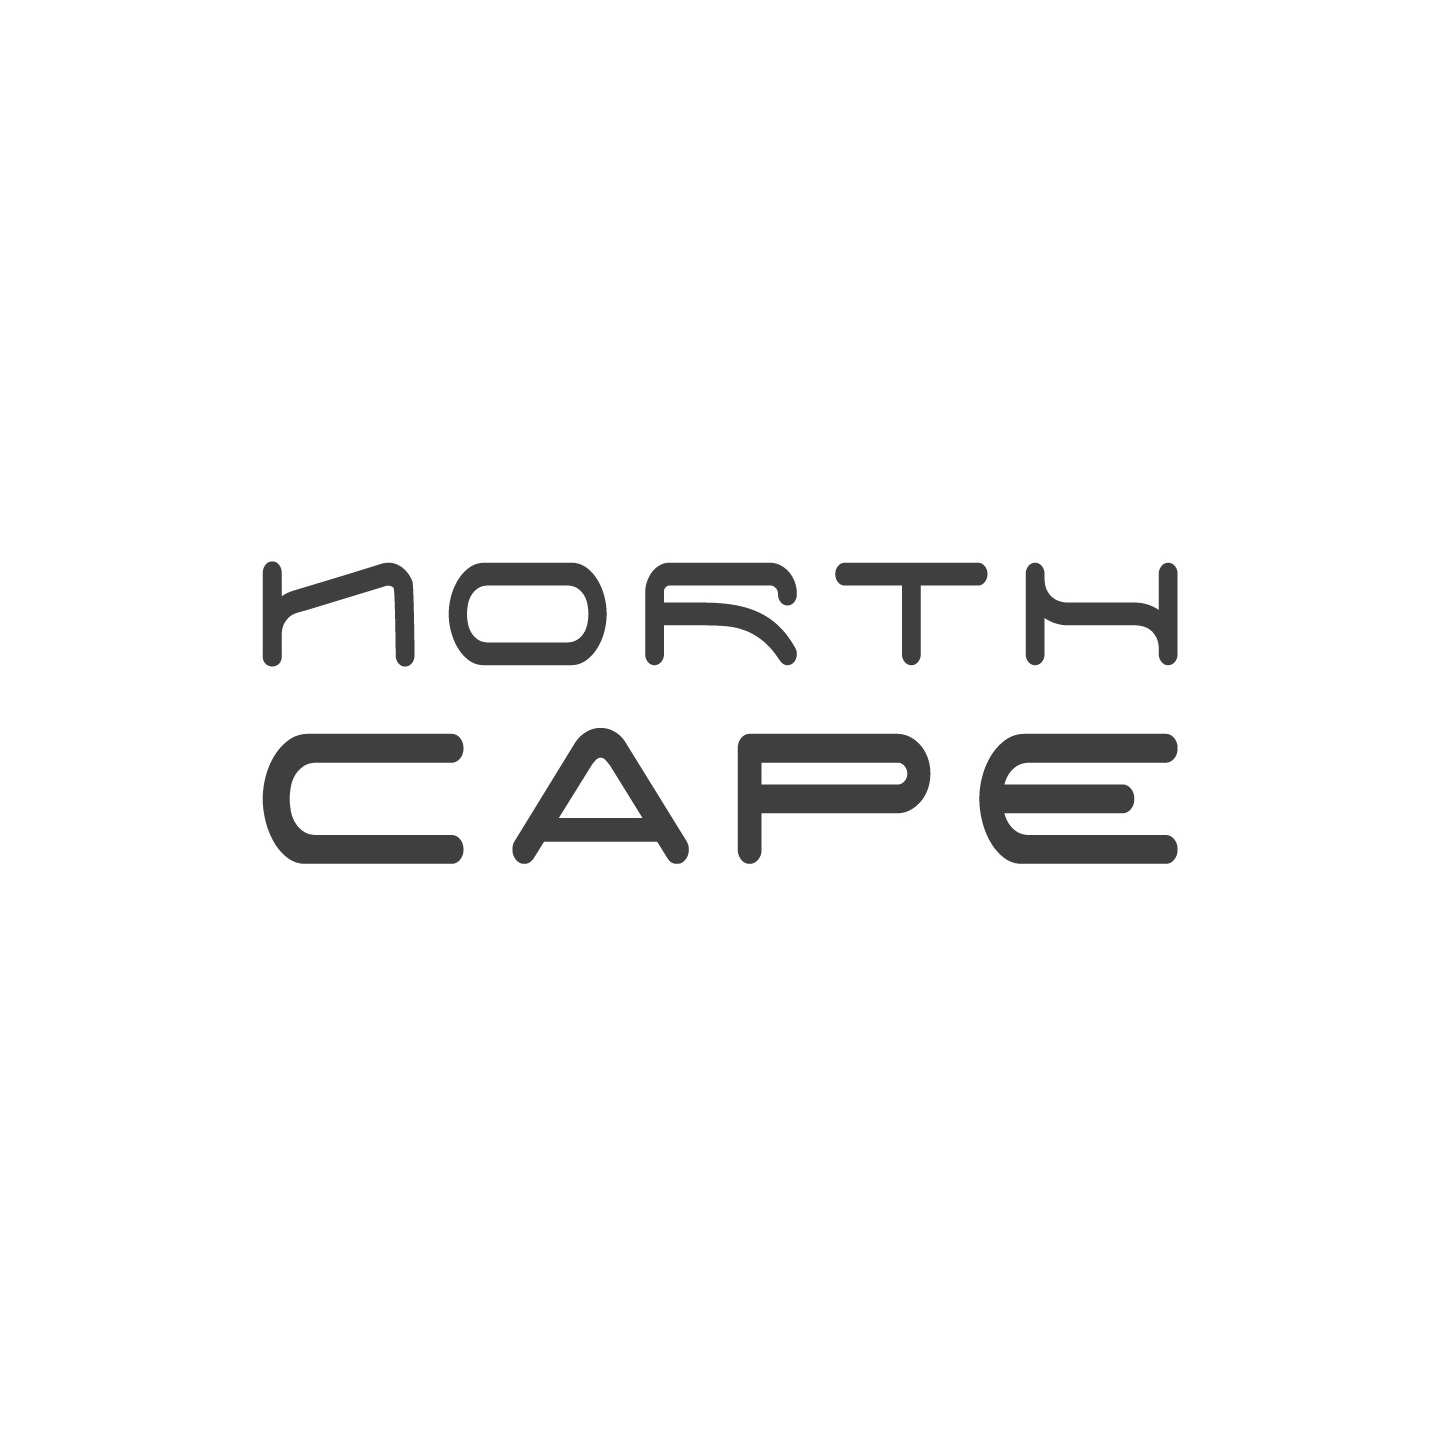 NC logo sobre blanco